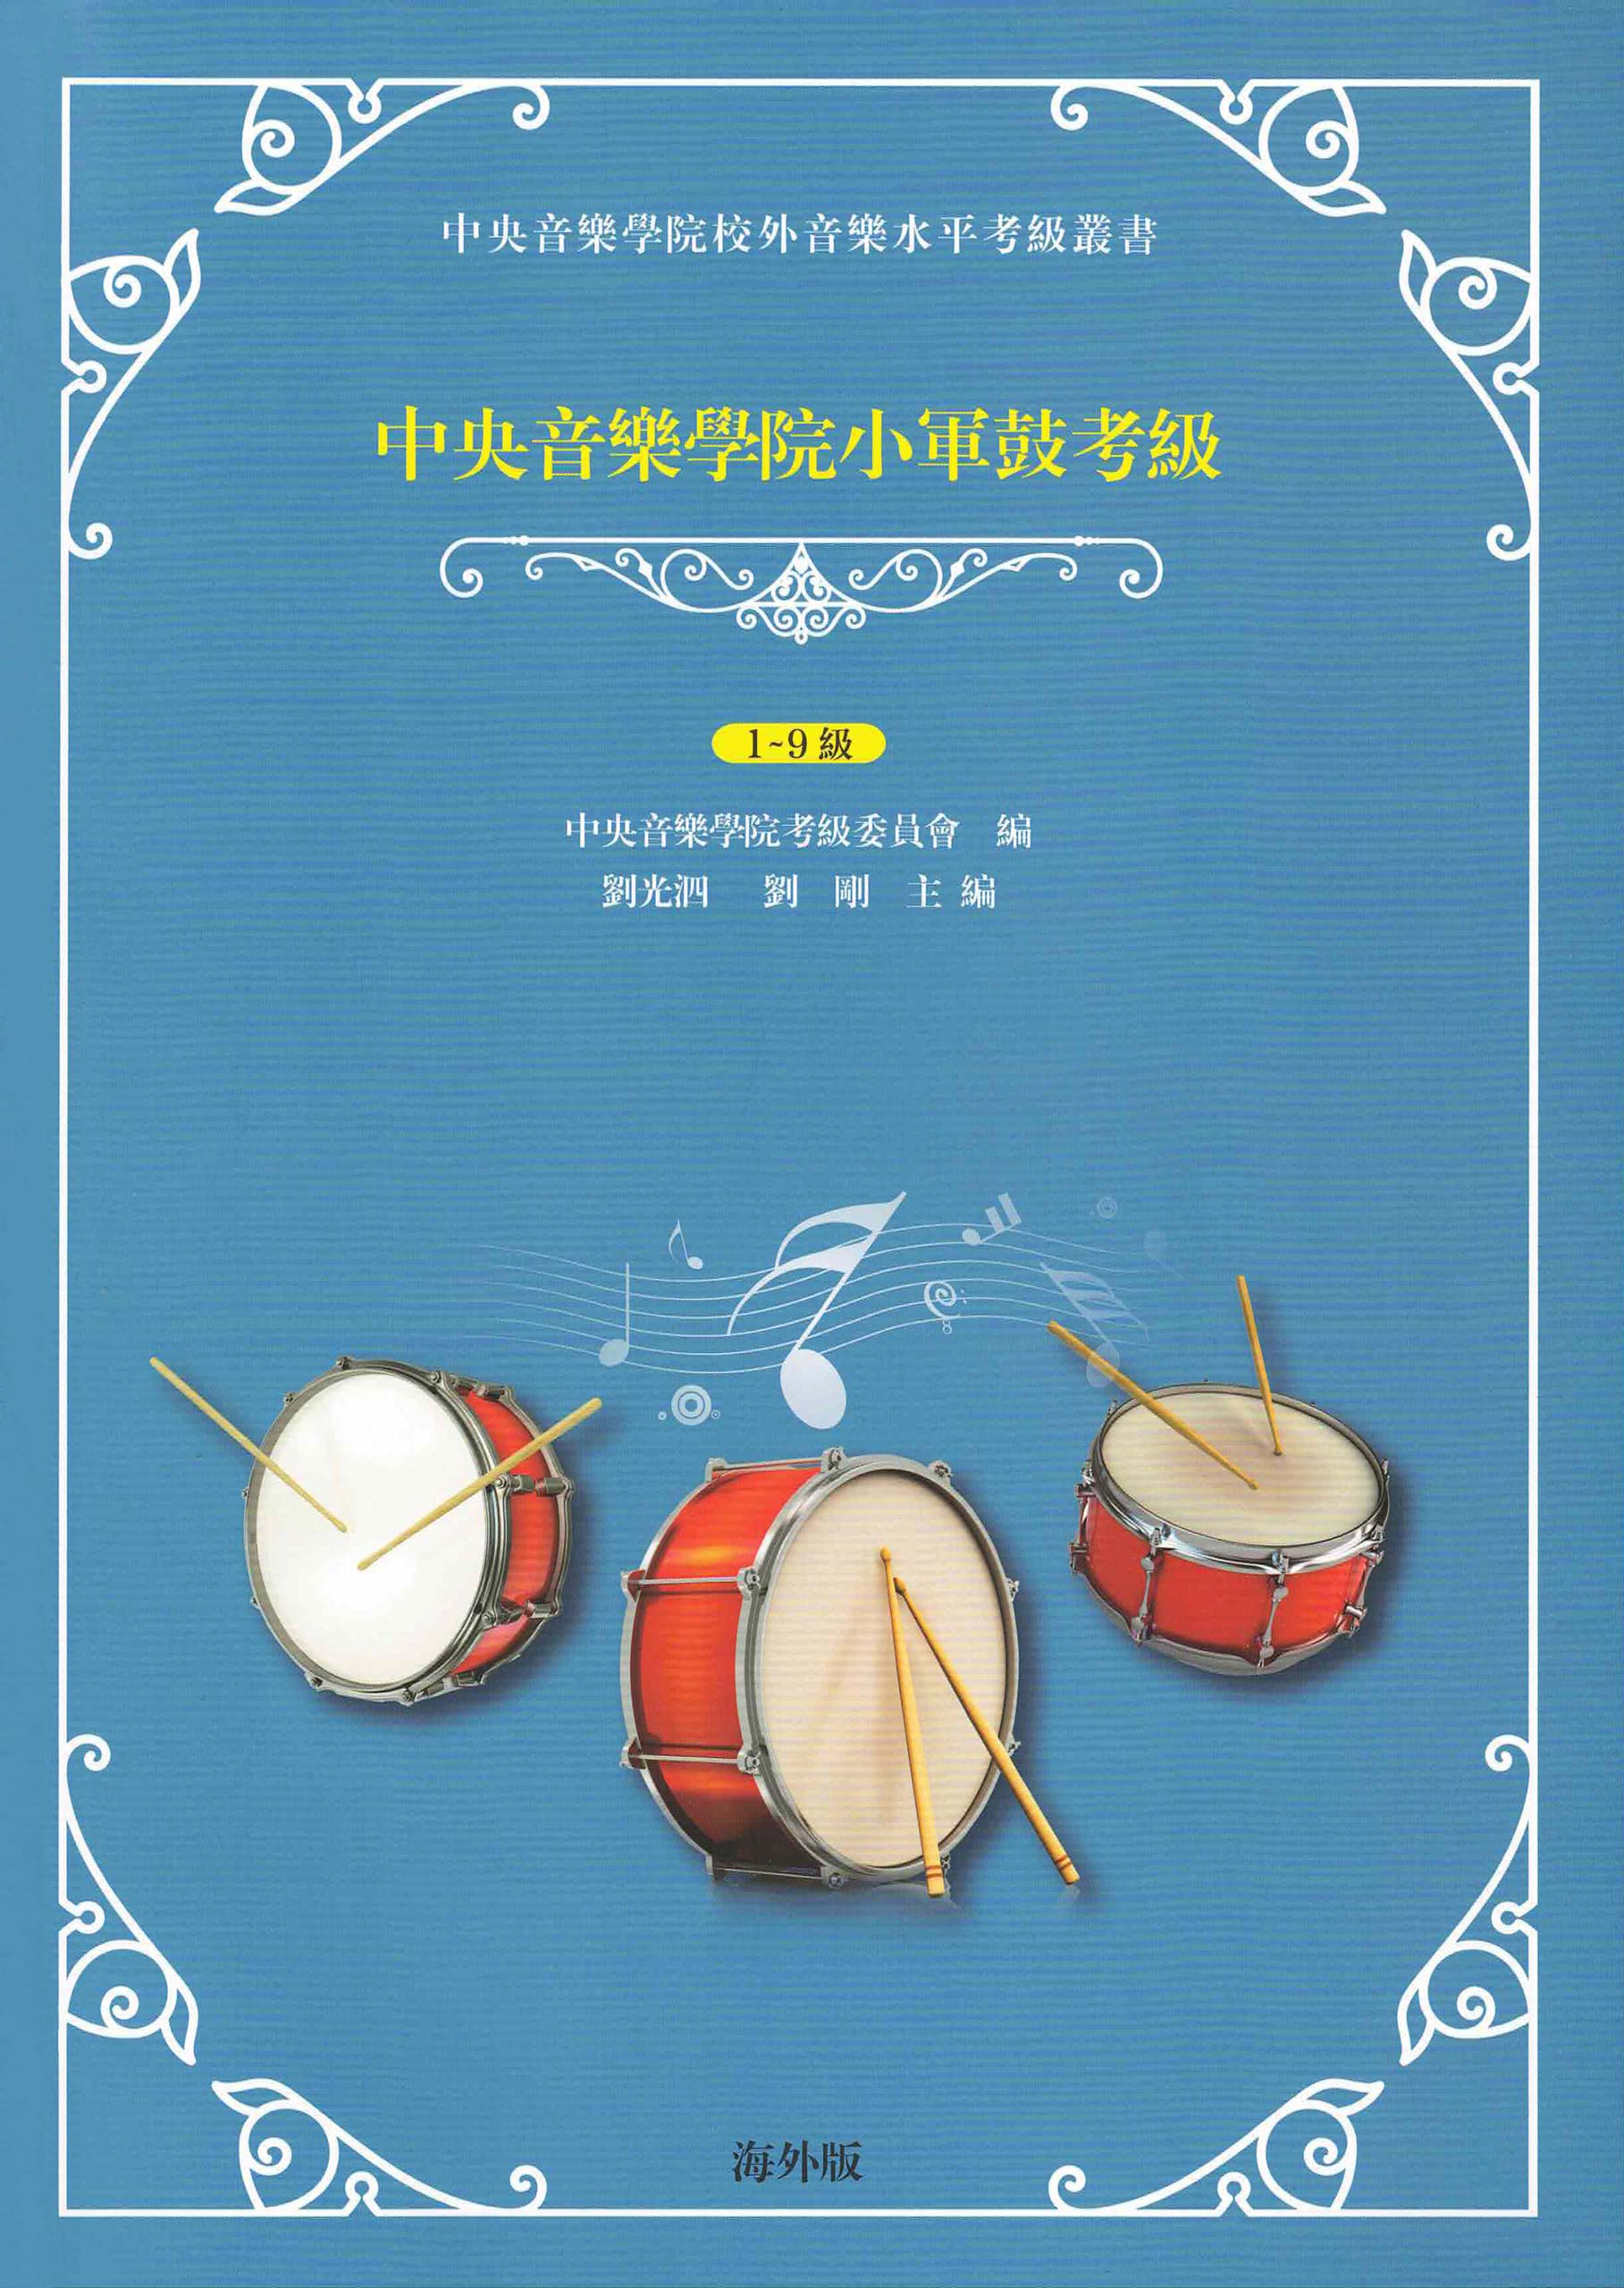 Percussion Grading Examination Book by CCOM - NAFA (Grade 1-9) Cover Page